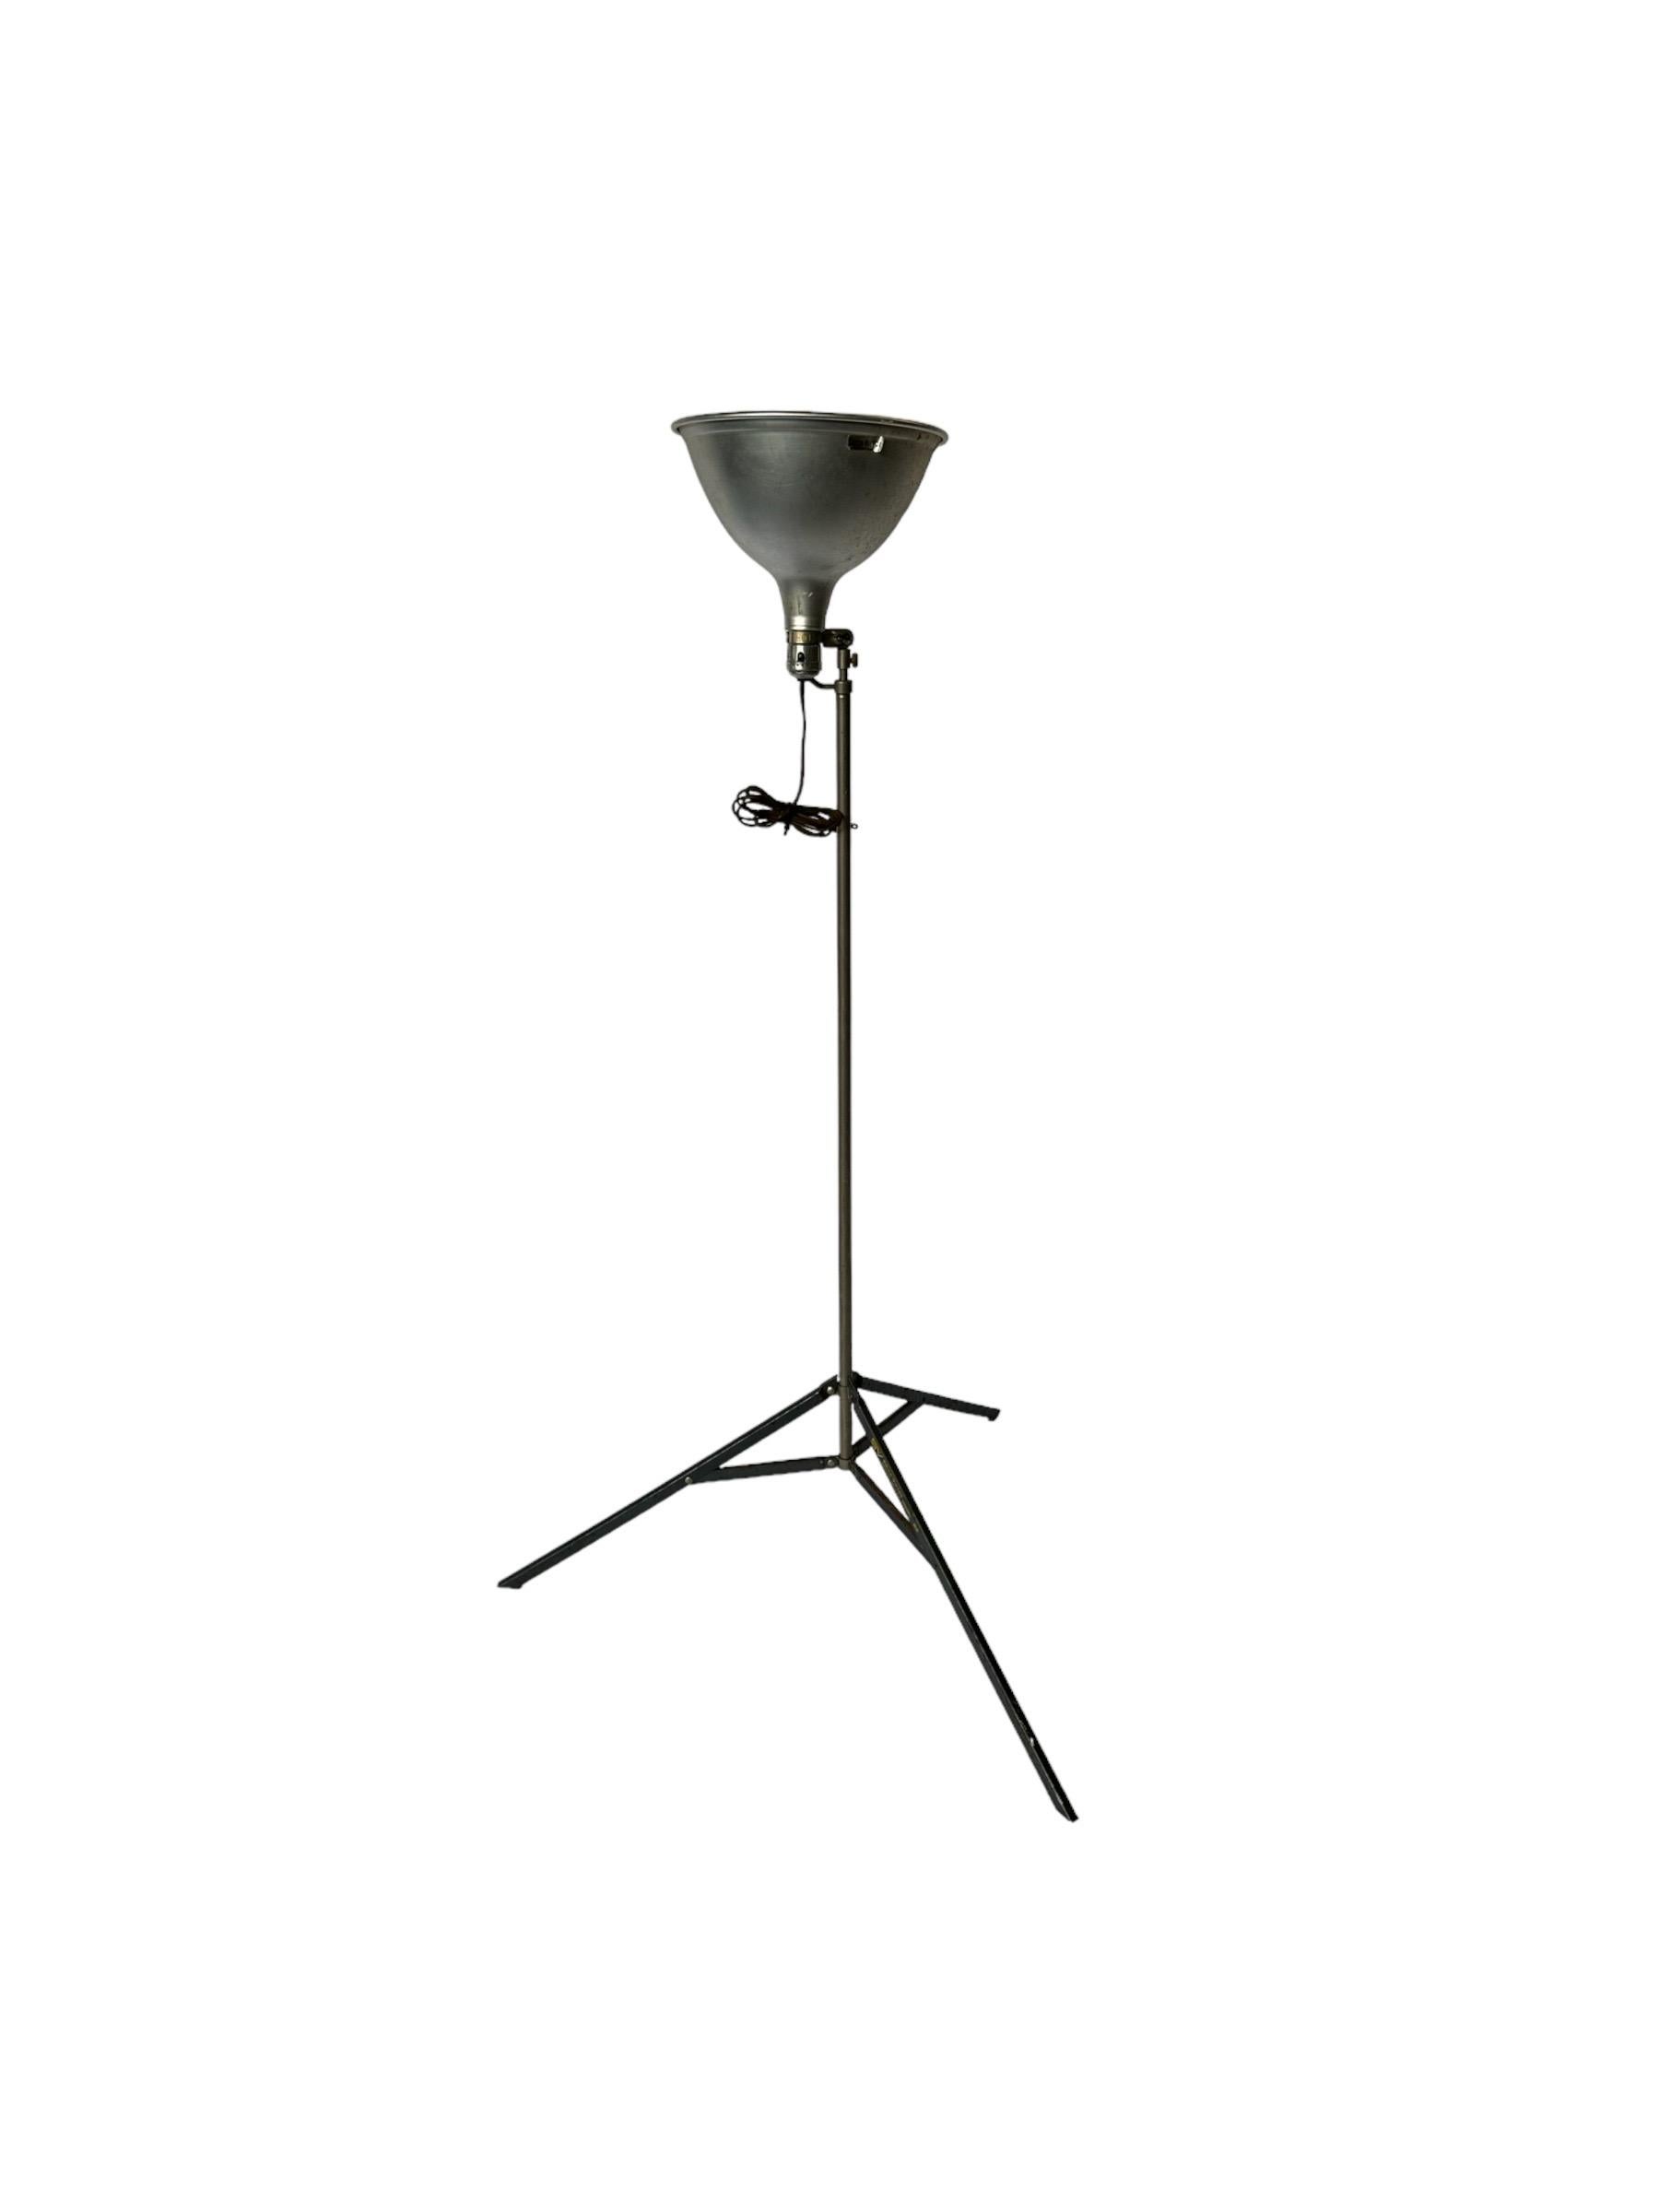 Metal Vintage Smith Victor Adjustable Height Industrial Tripod Floor Lamp For Sale